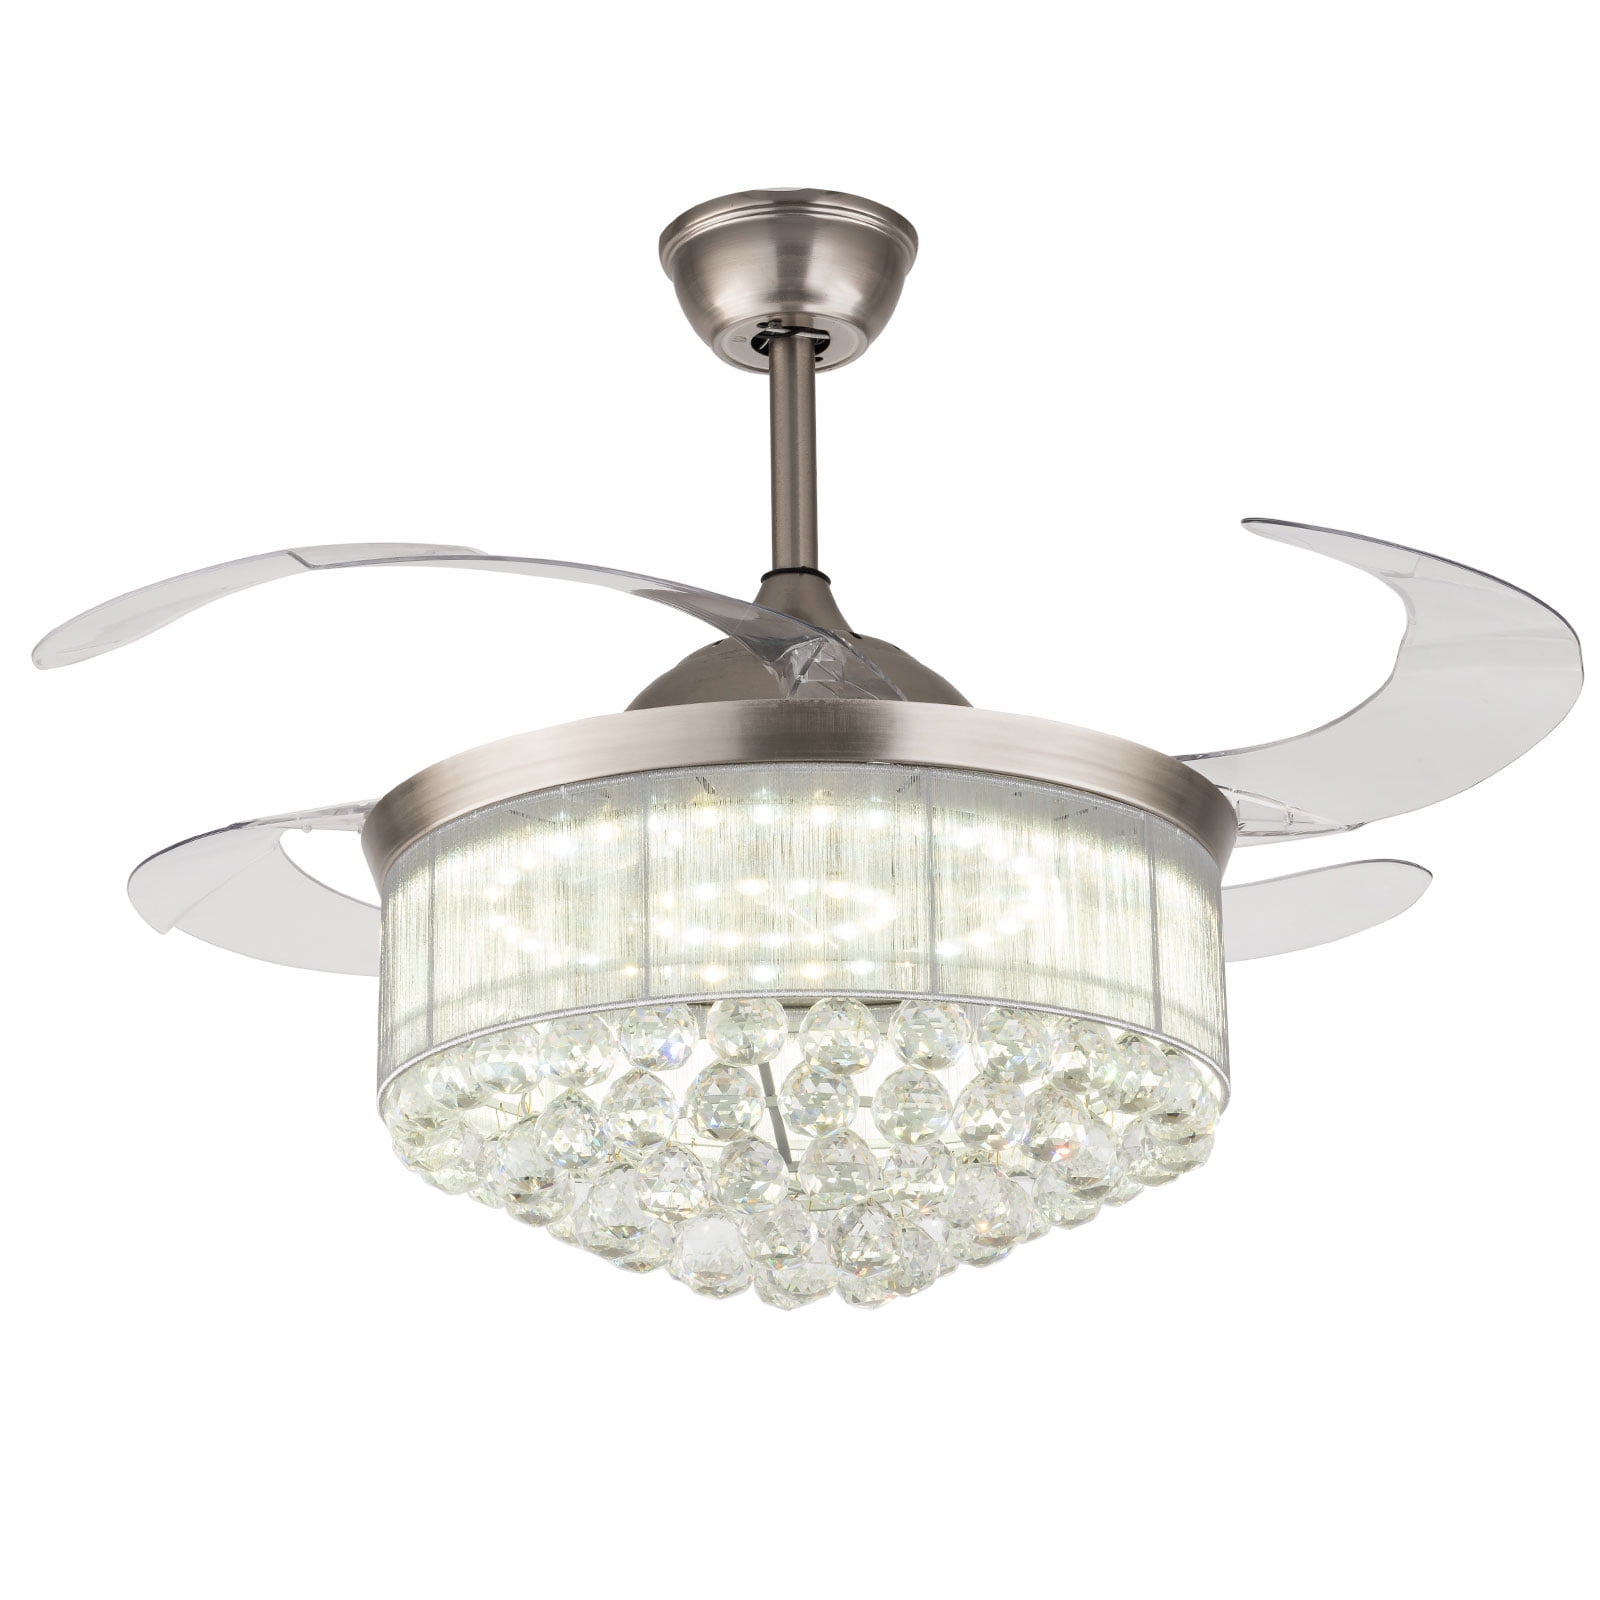 42" LED Invisible Fandelier Crystal Retractable Ceiling Fans Light 3Color change 